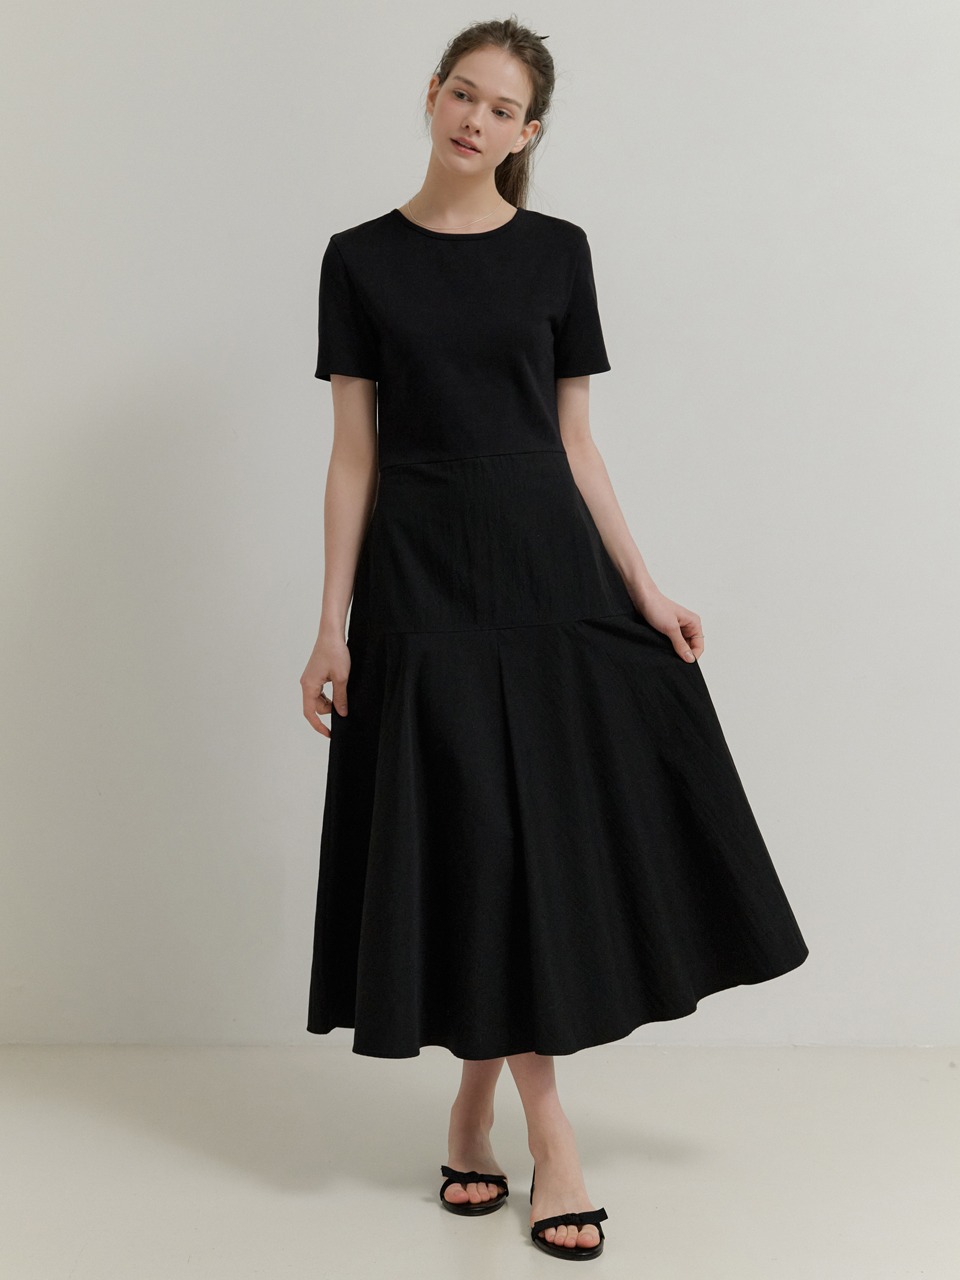 Tweener flare dress (black)